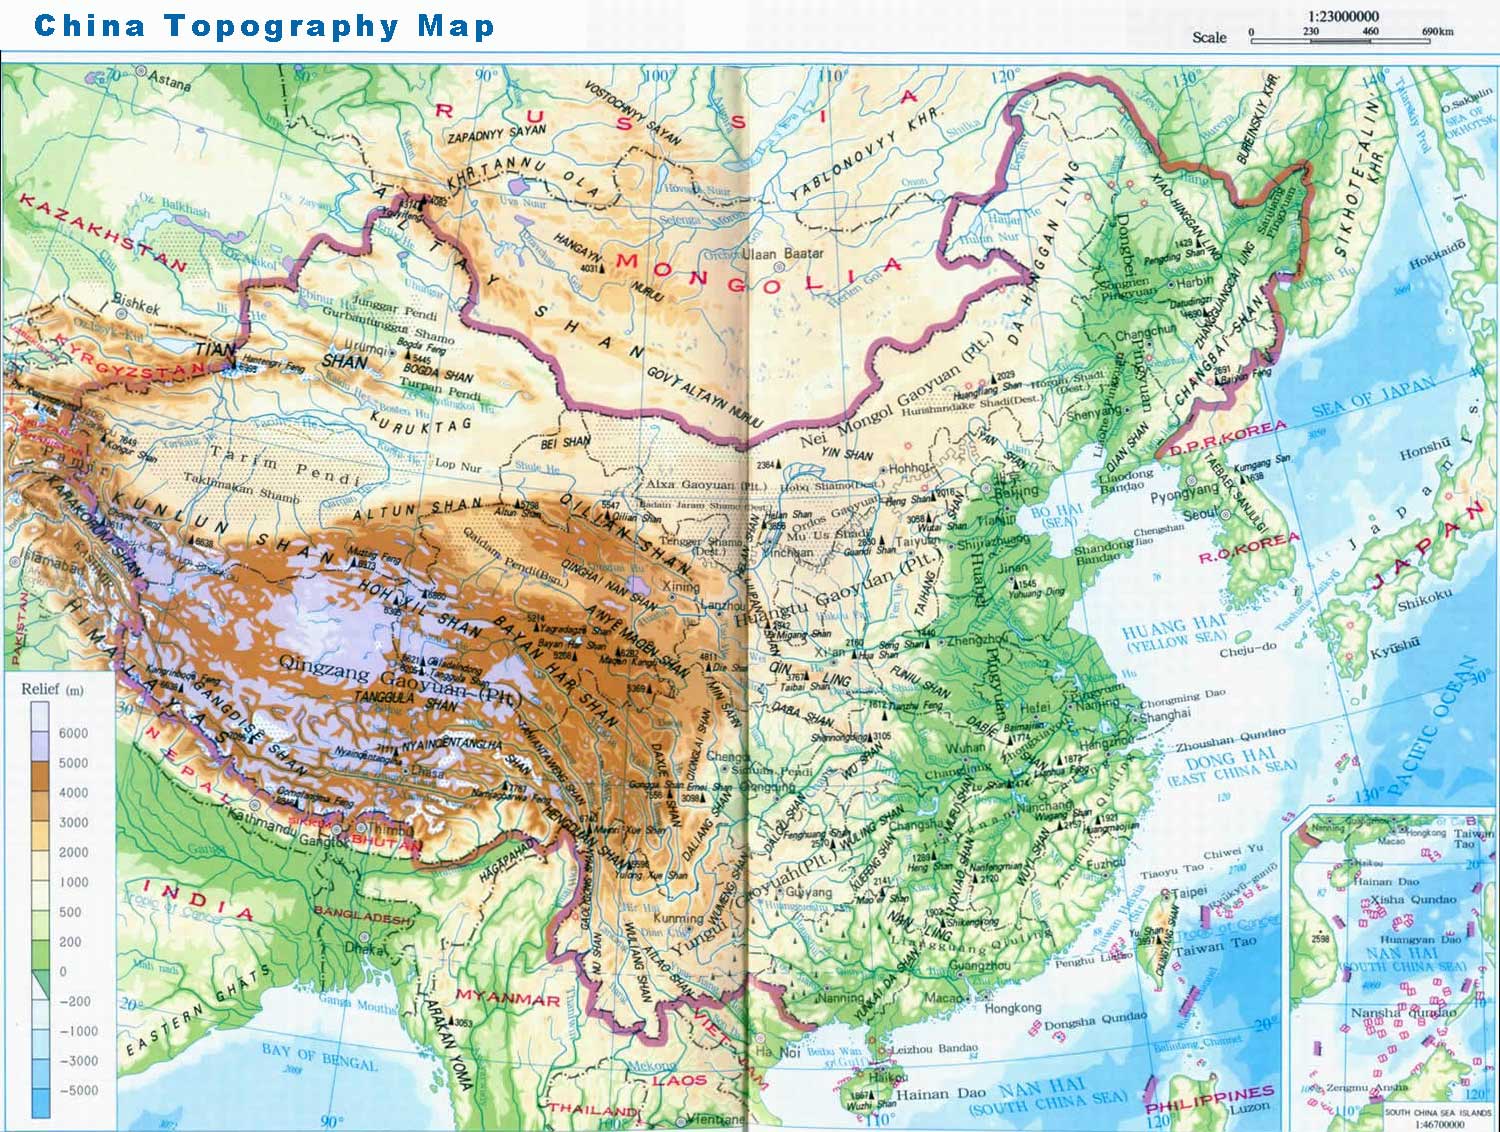 China-Topography-Map.jpg